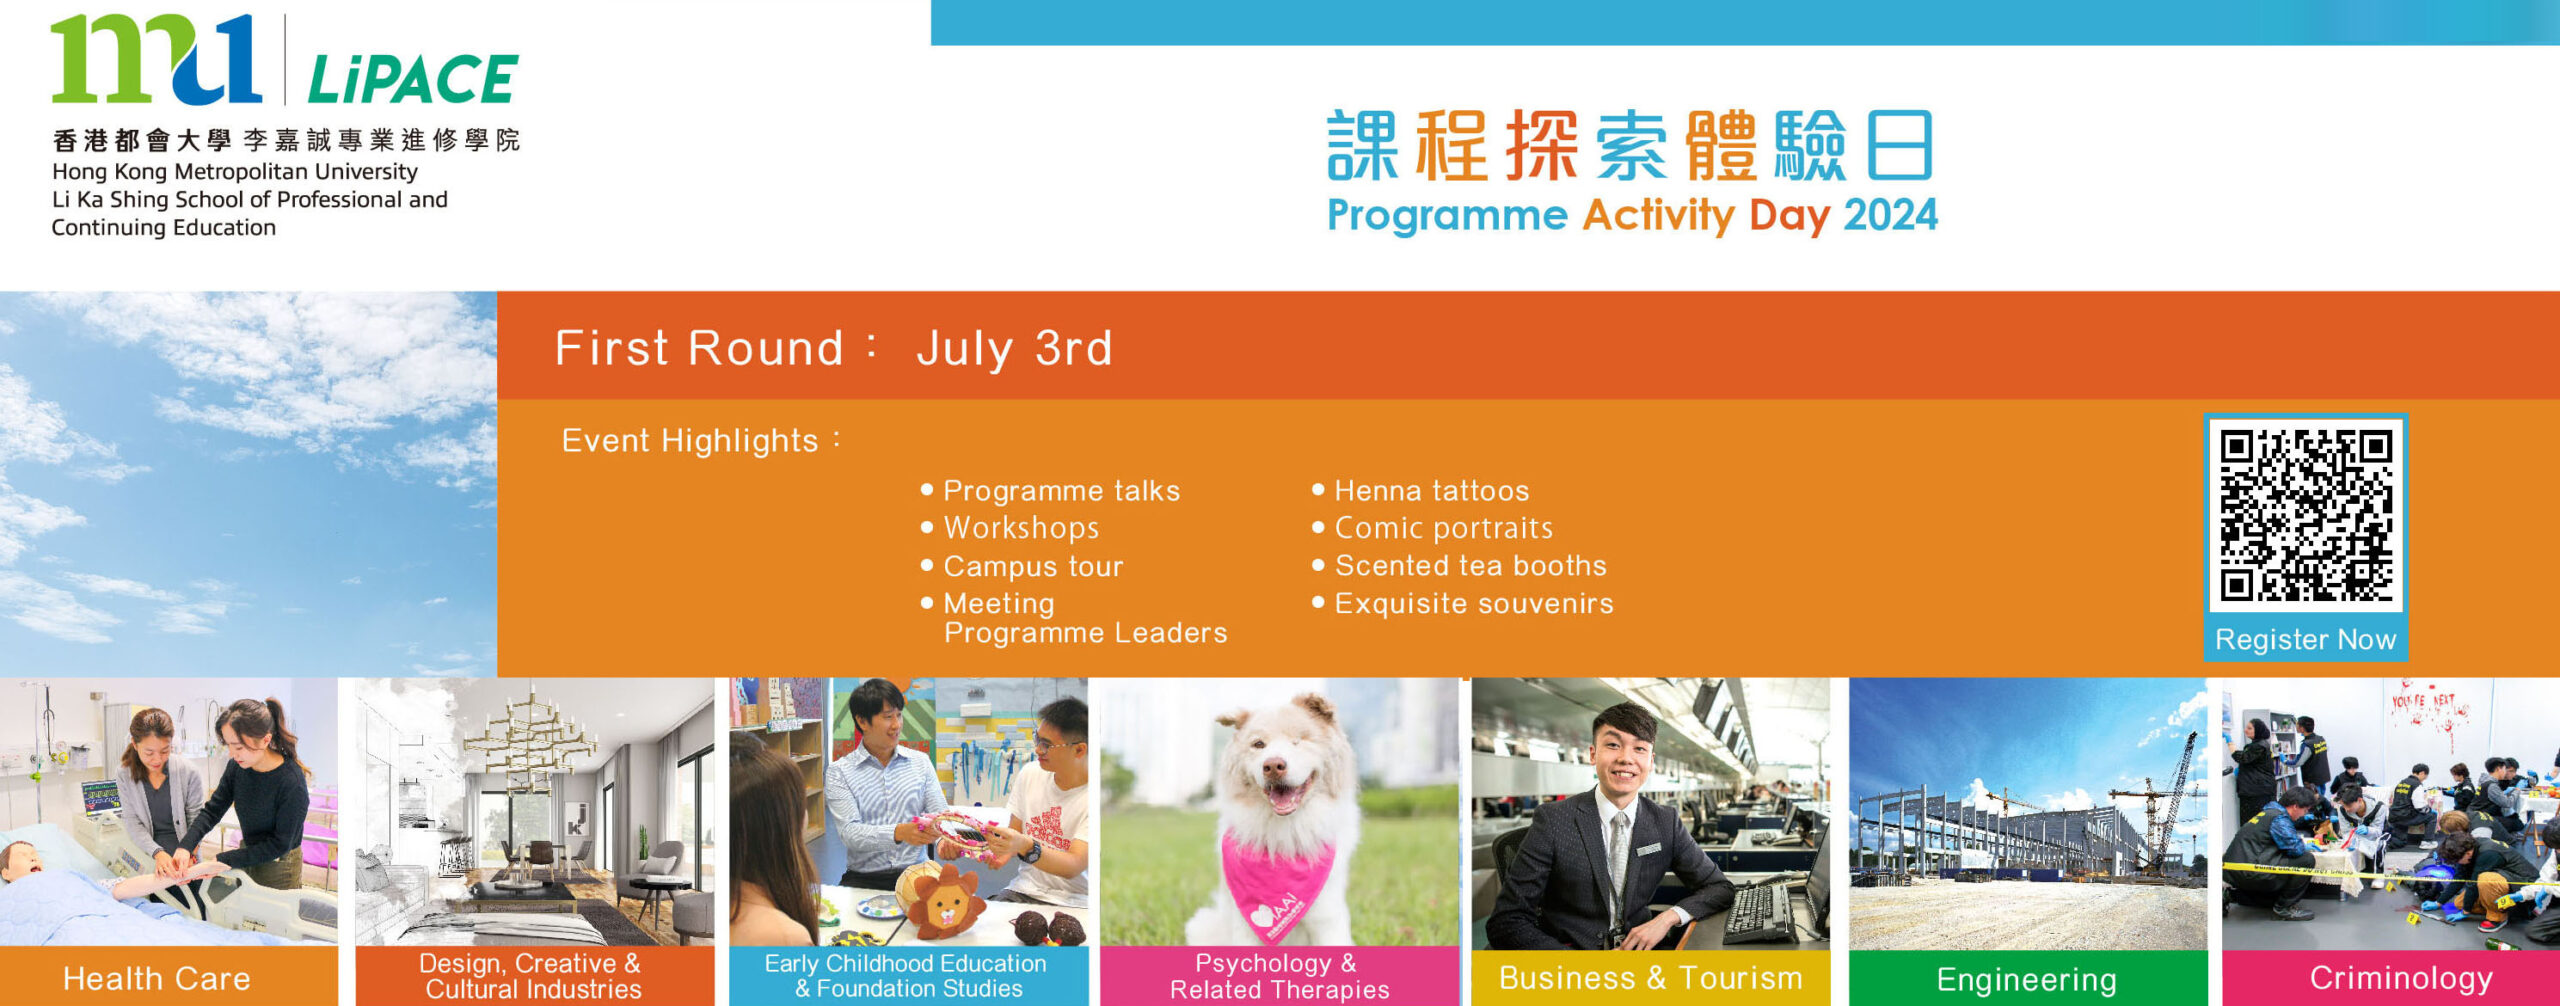 Programme Activities Day 2024